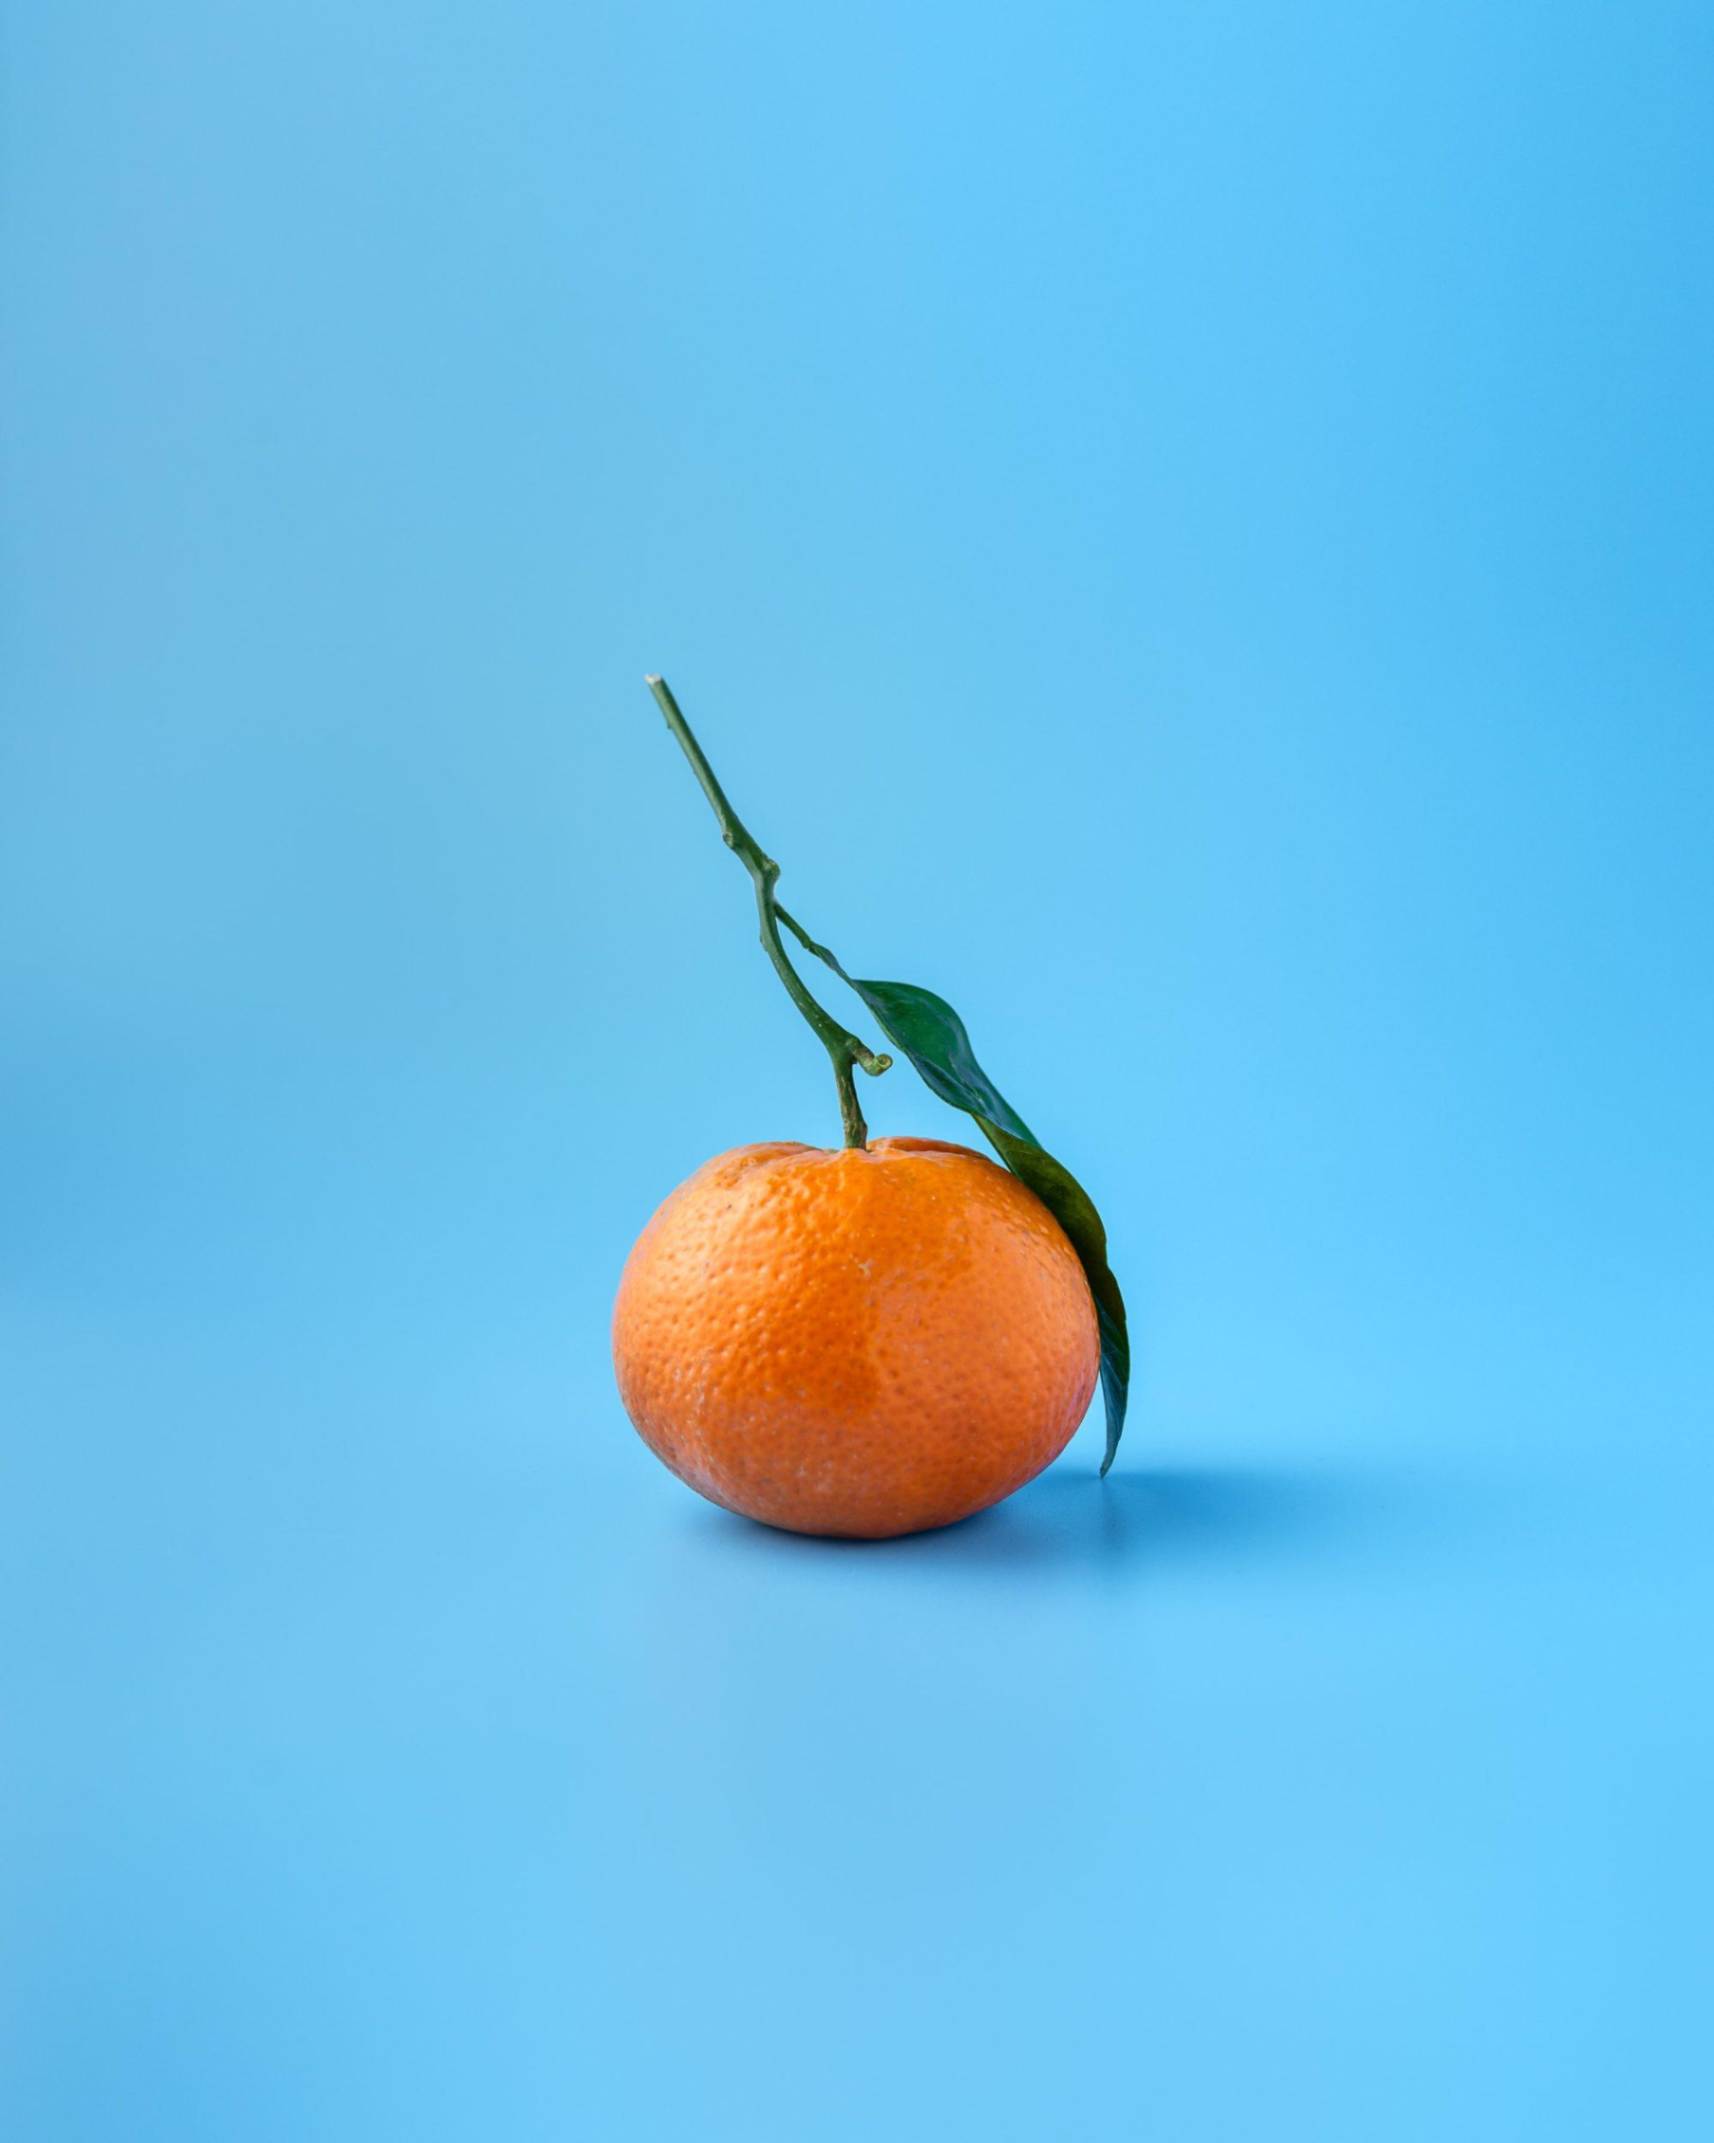 An orange against a blue backdrop